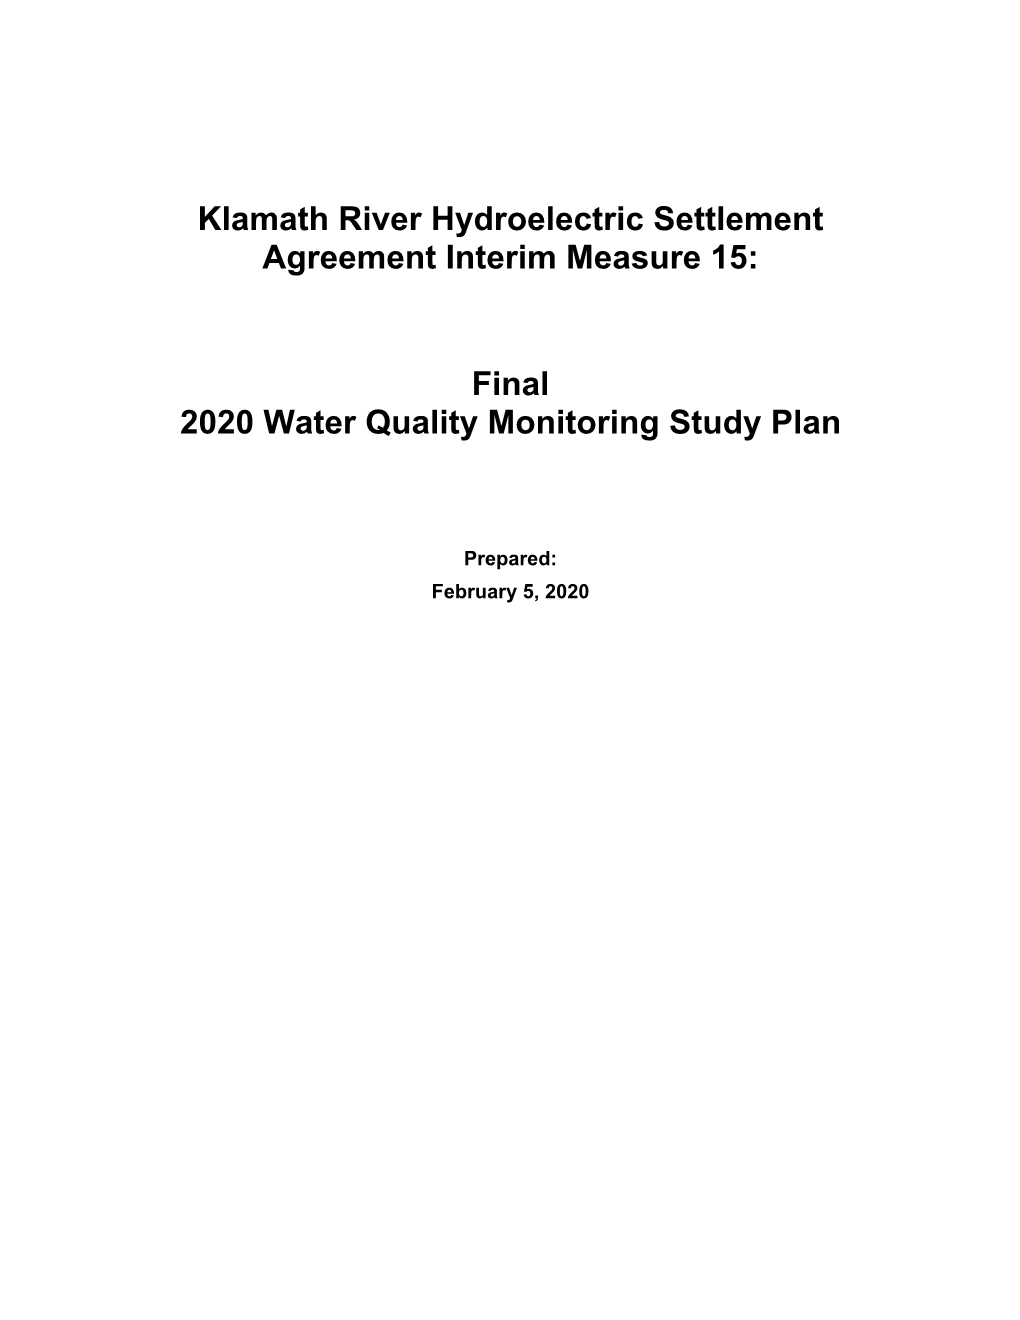 Klamath River Hydroelectric Settlement Agreement Interim Measure 15